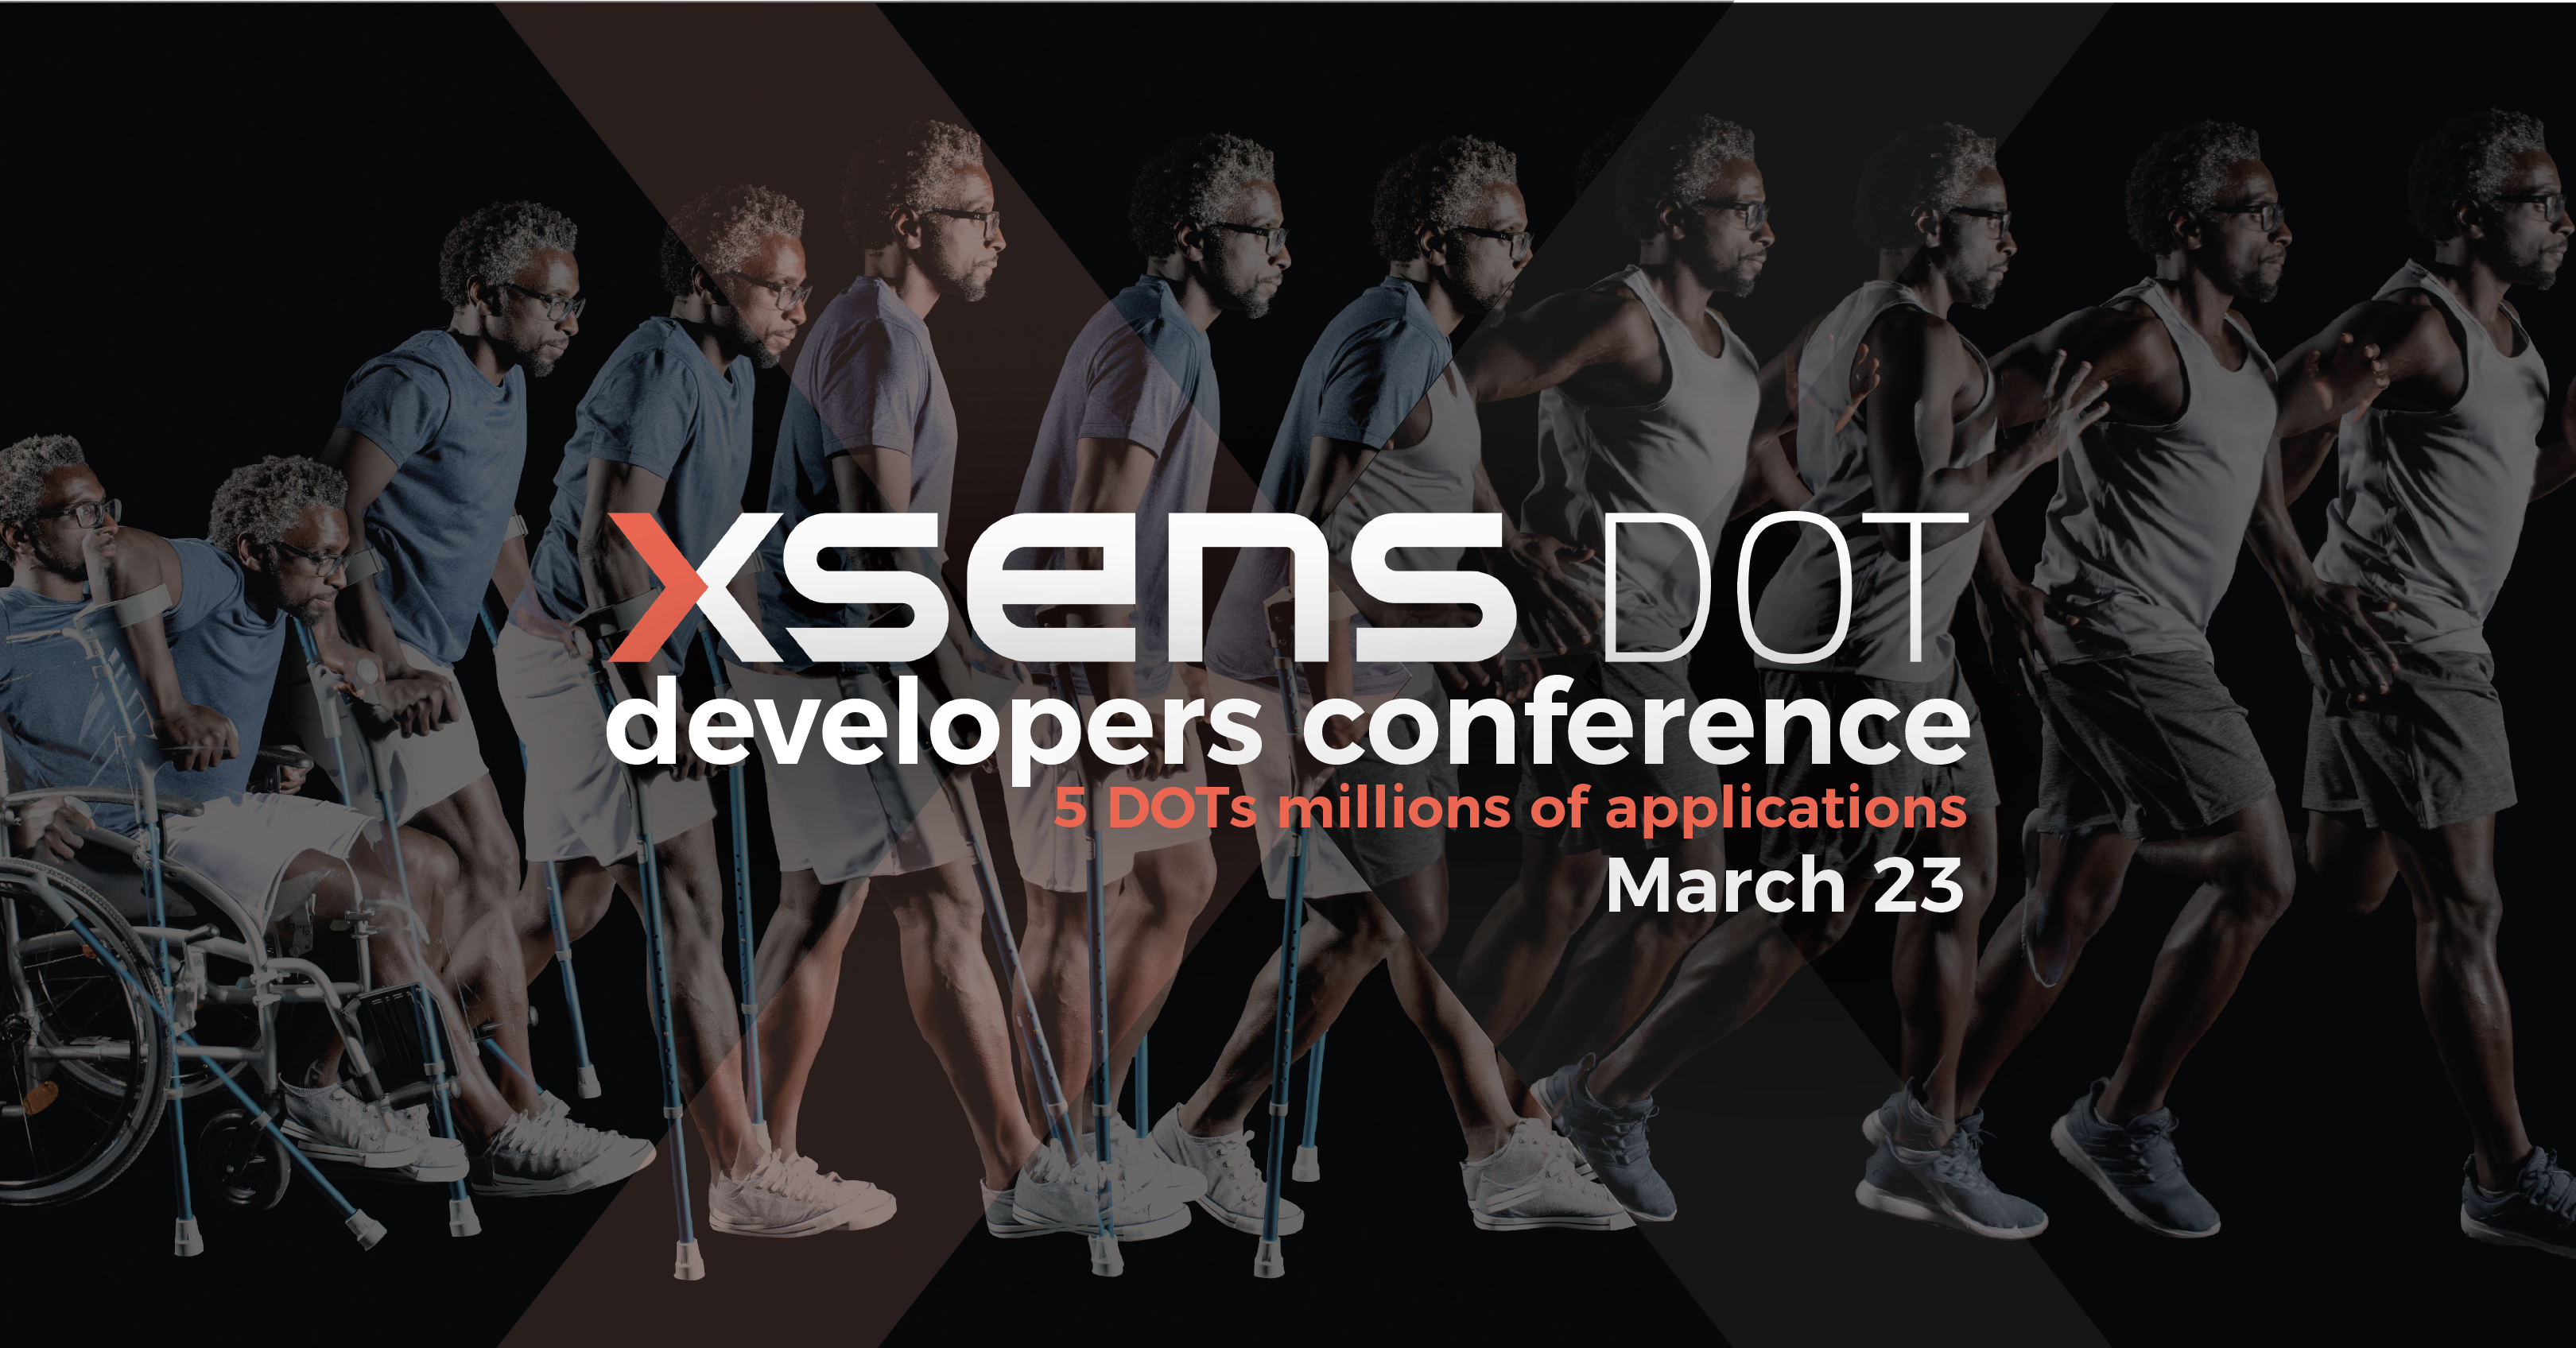 xsens dot conference-01-1-1